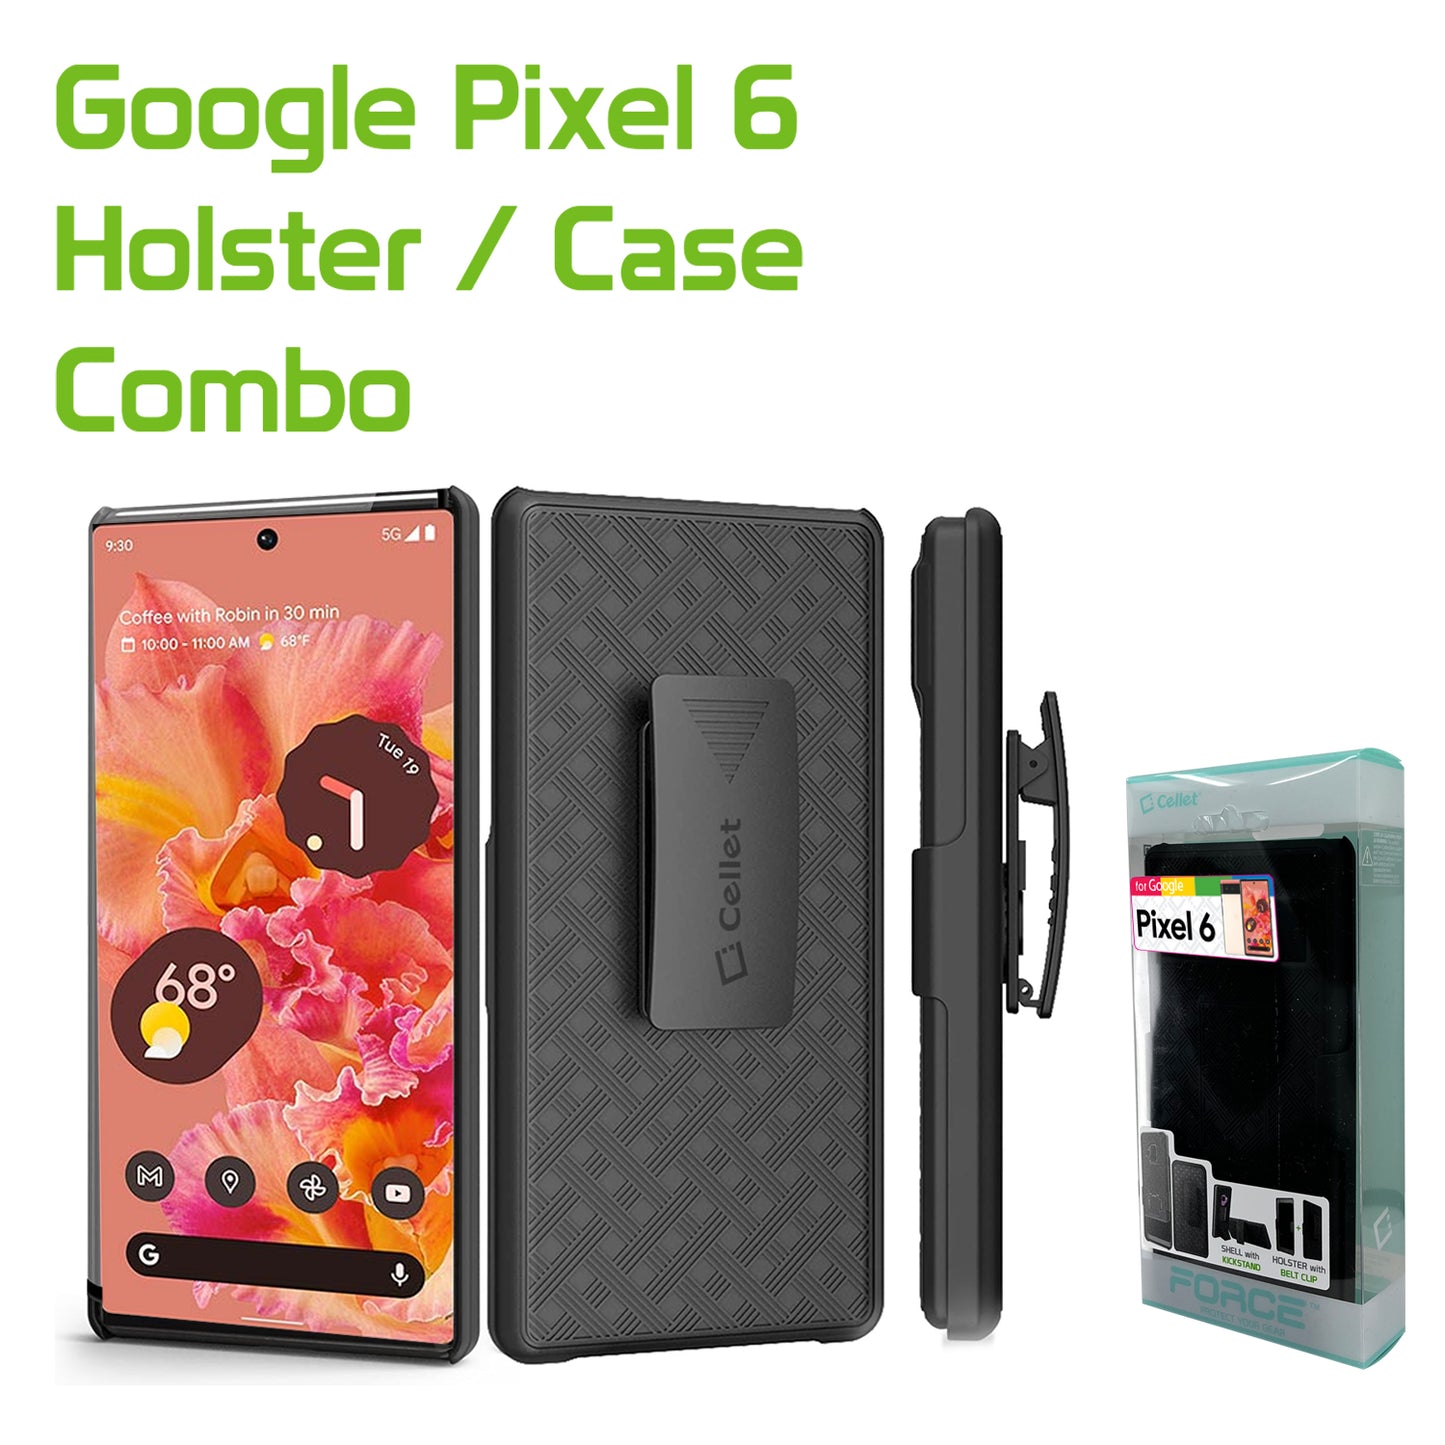 Pixel 6 Holster, Shell Holster Kickstand Case with Spring Belt Clip for Google Pixel 6 – Black – by Cellet